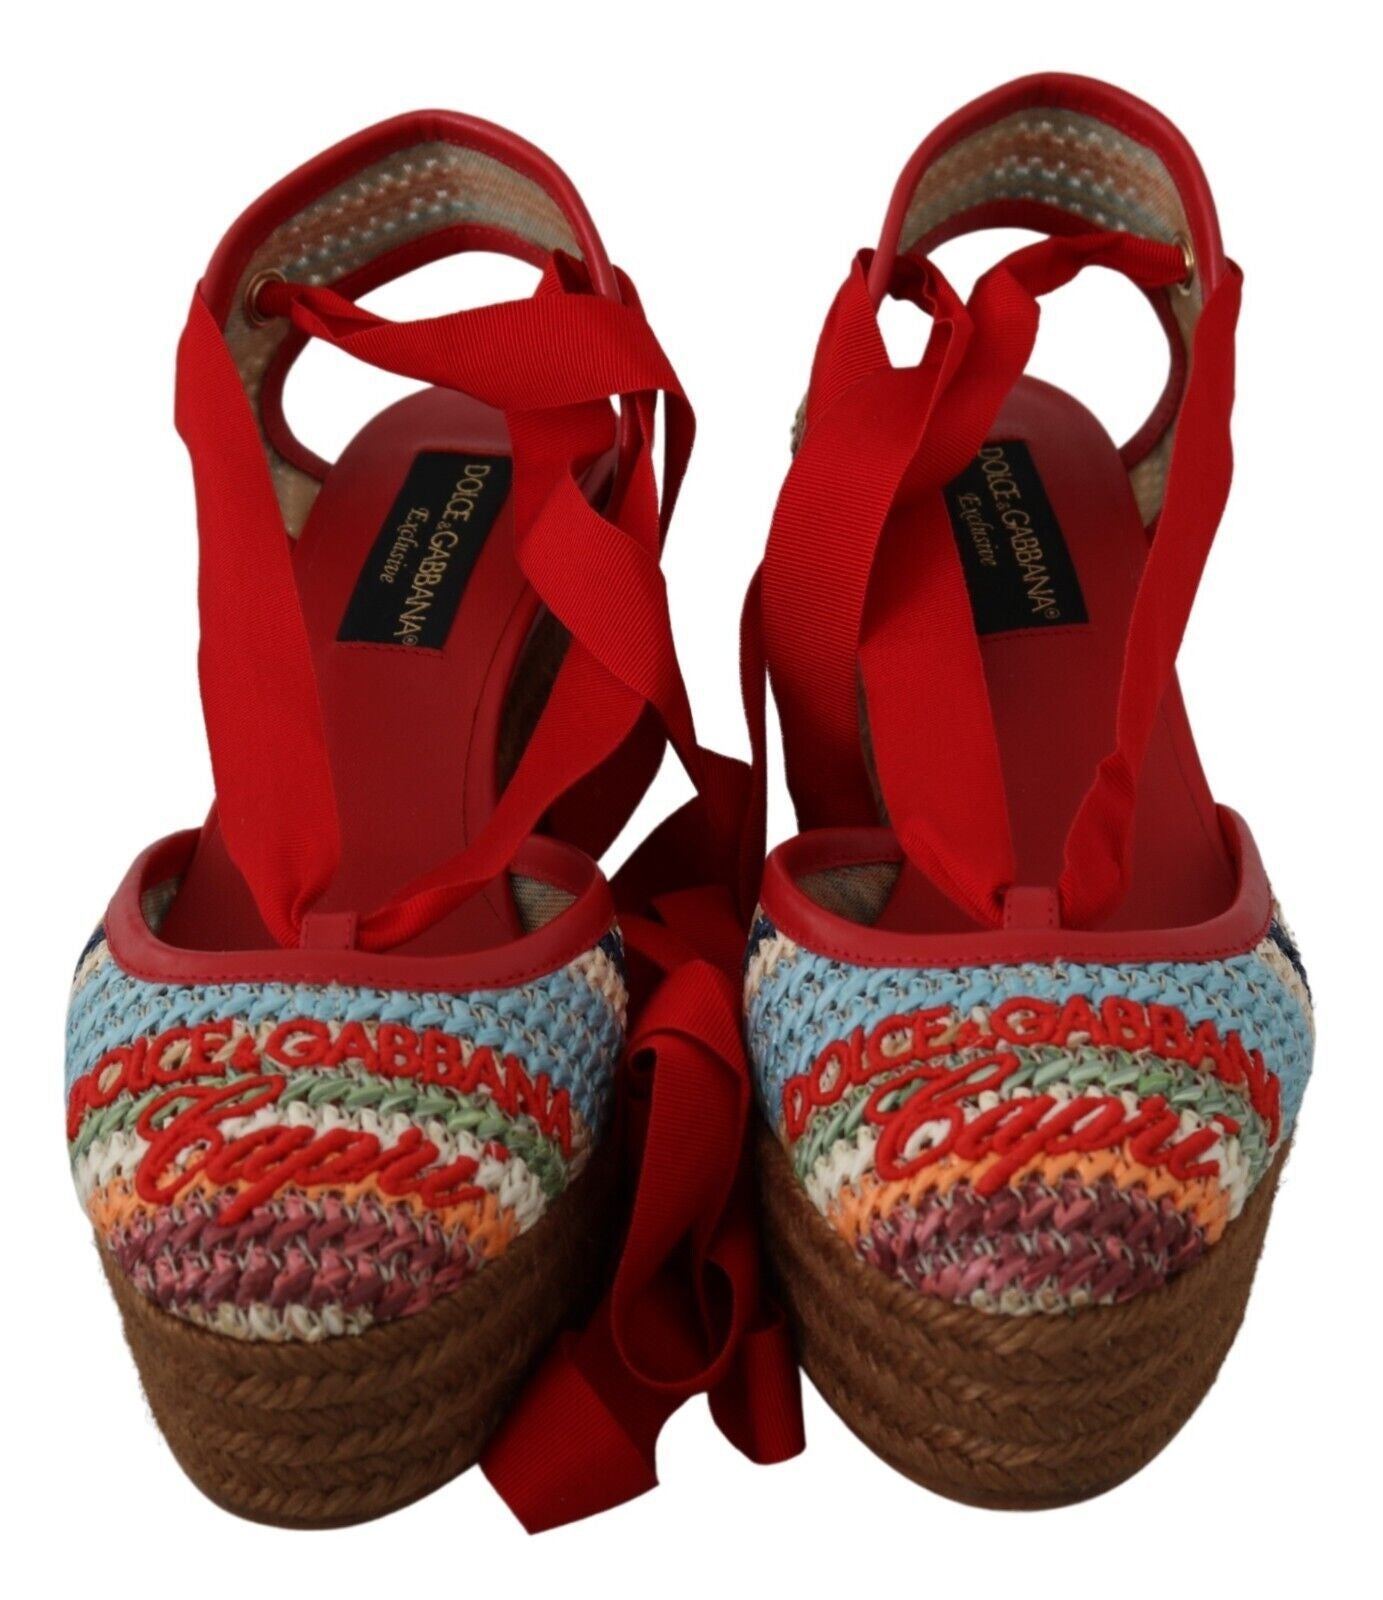 Multicolor Raffia Wedge Heels Sandals